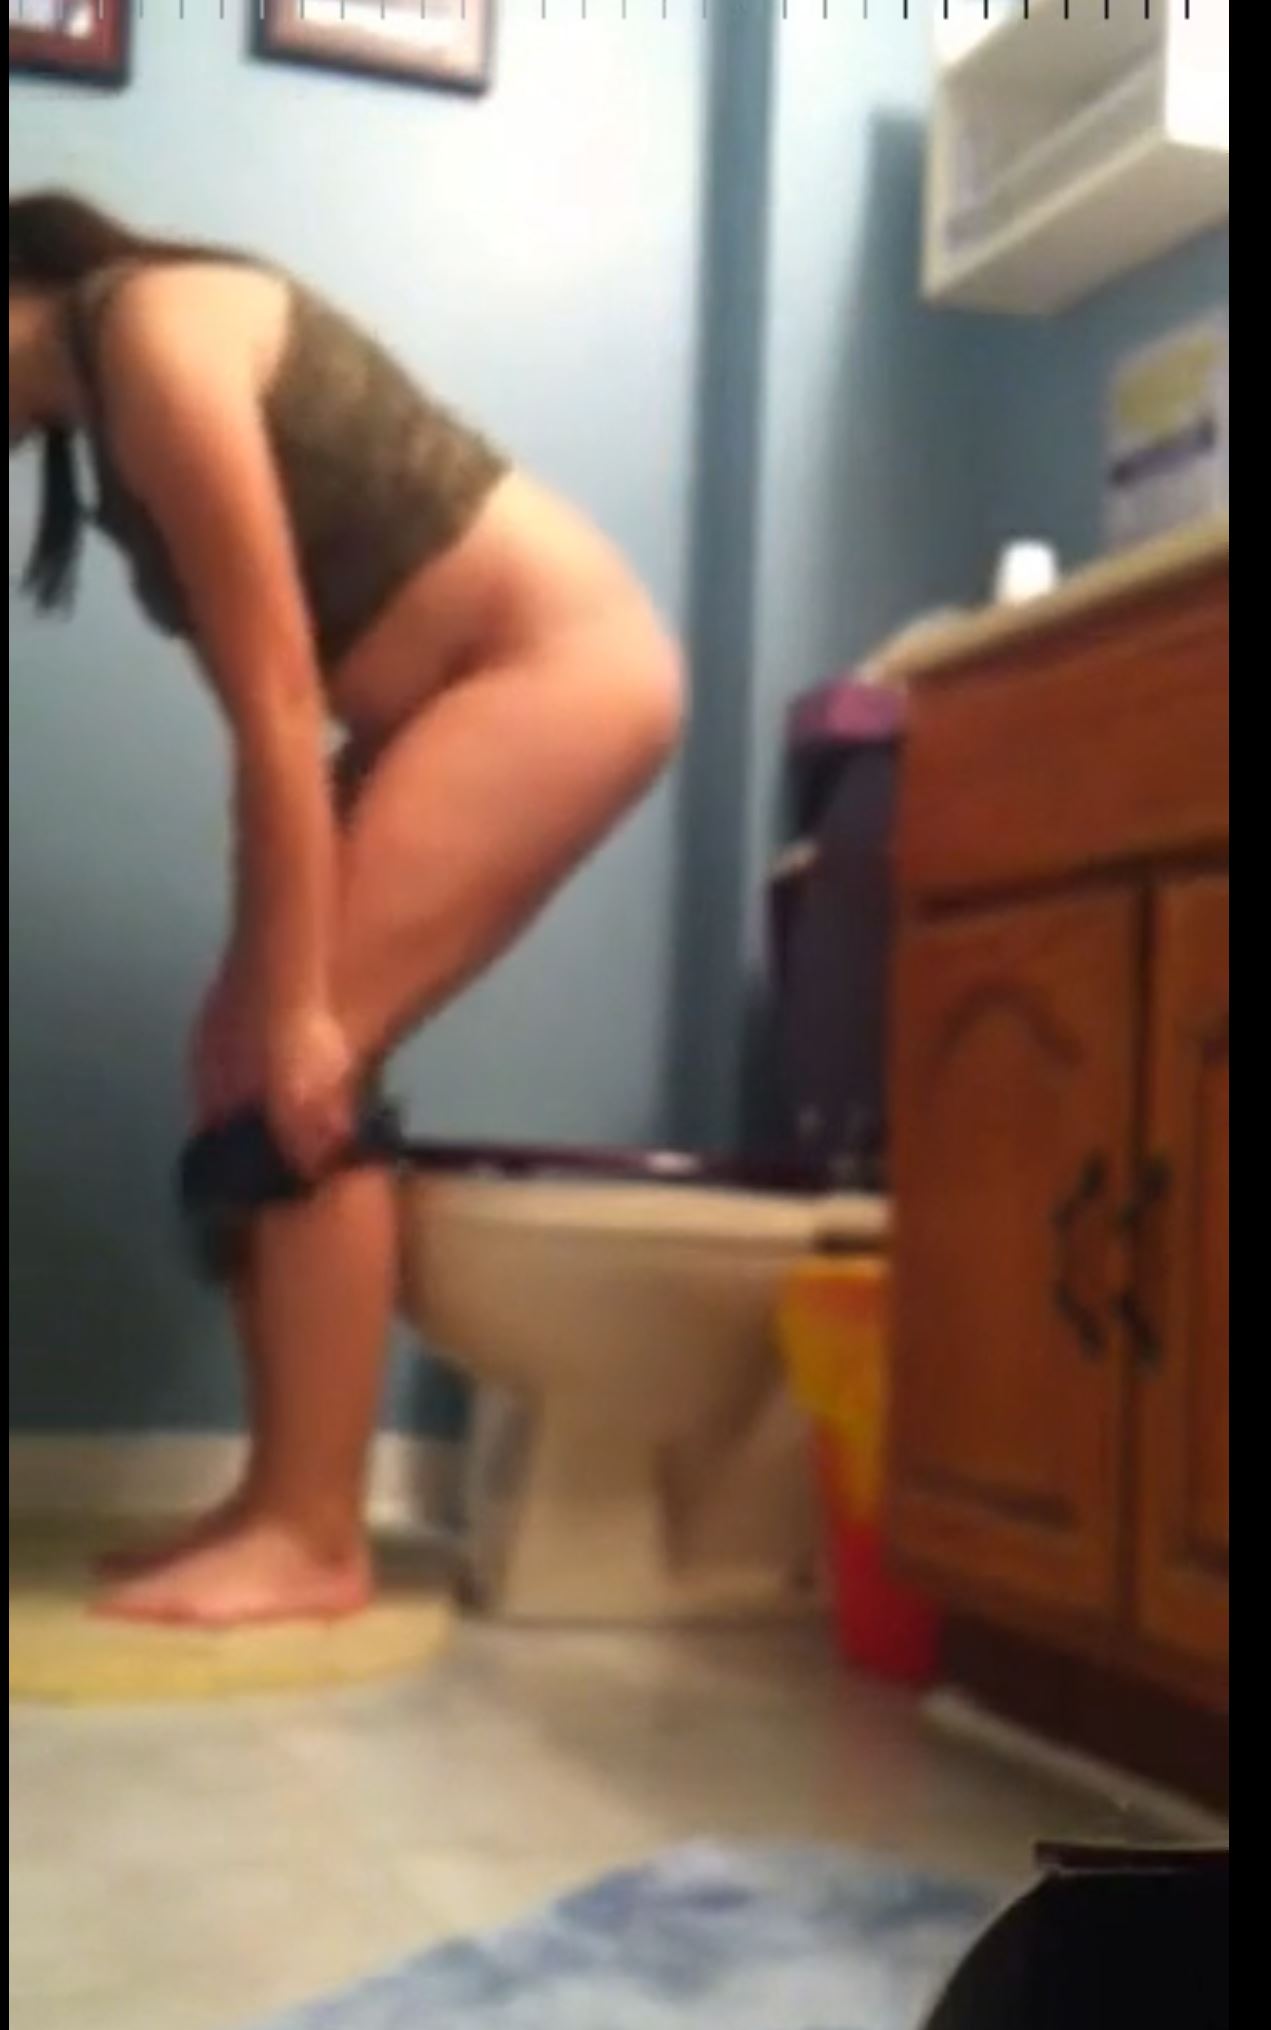 Cute Teen Girl Peeing On The Toilet.